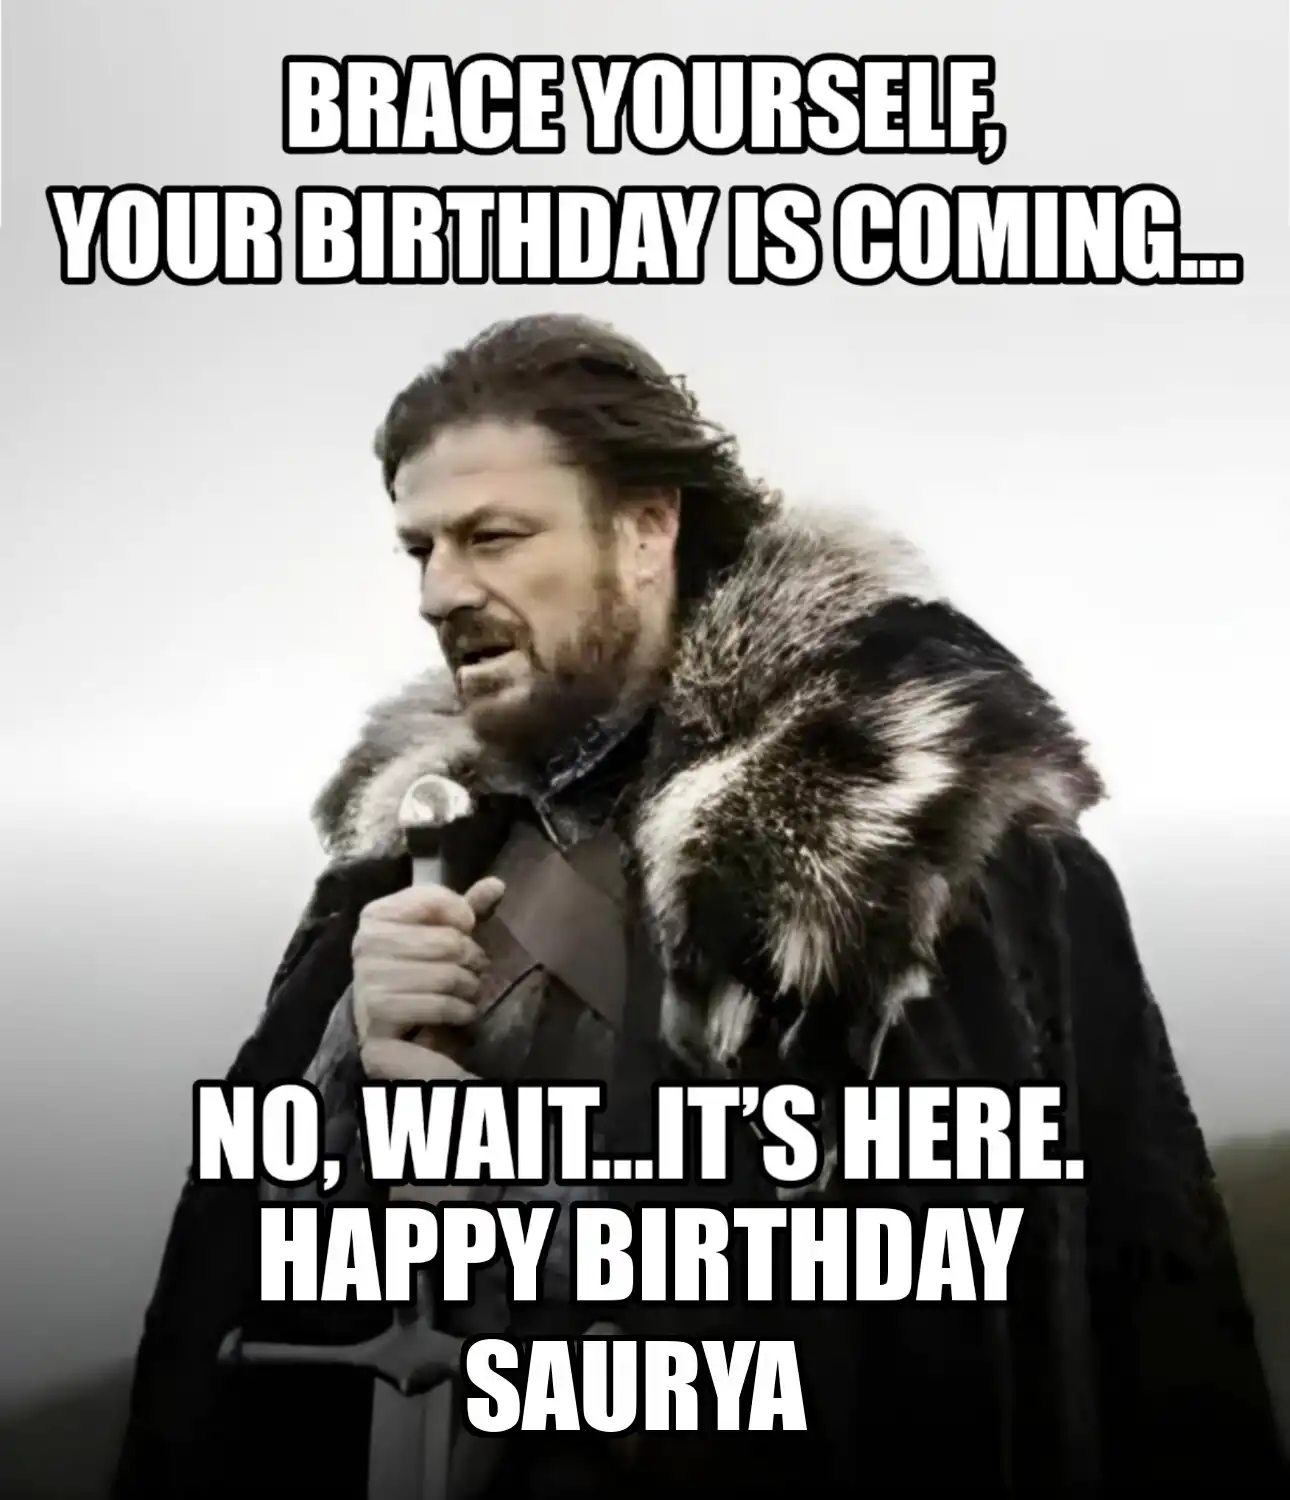 Happy Birthday Saurya Brace Yourself Your Birthday Is Coming Meme